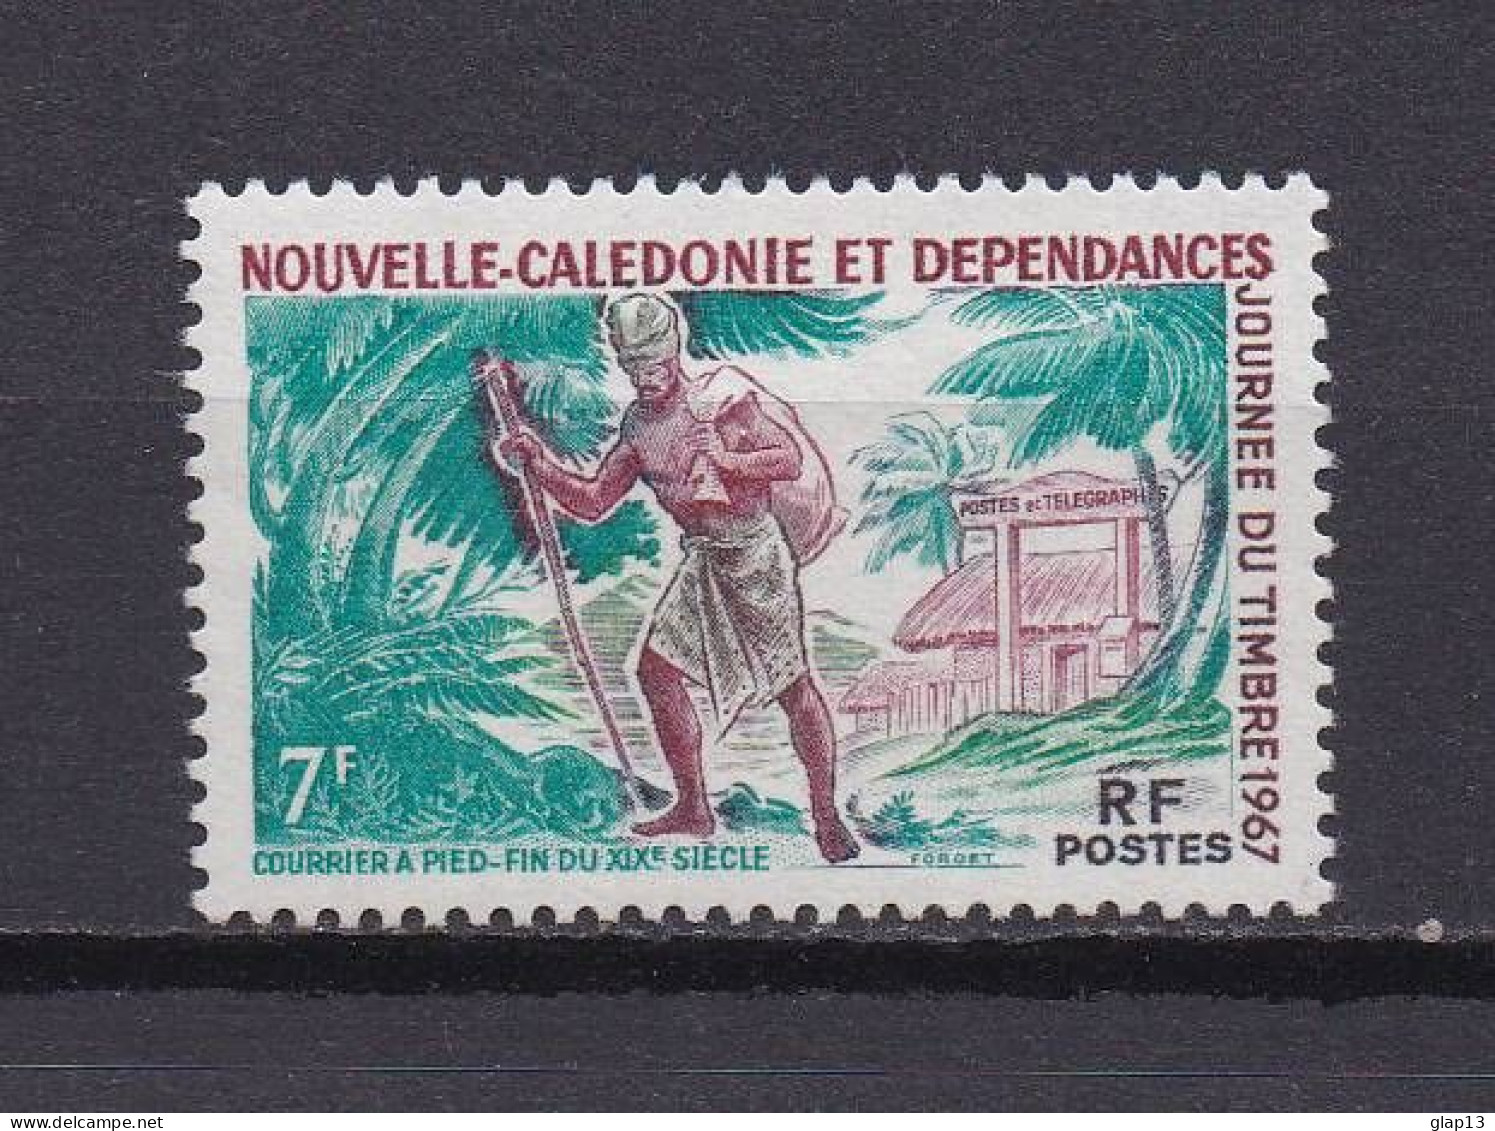 NOUVELLE-CALEDONIE 1967 TIMBRE N°340 NEUF AVEC CHARNIERE JOURNEE DU TIMBRE - Neufs